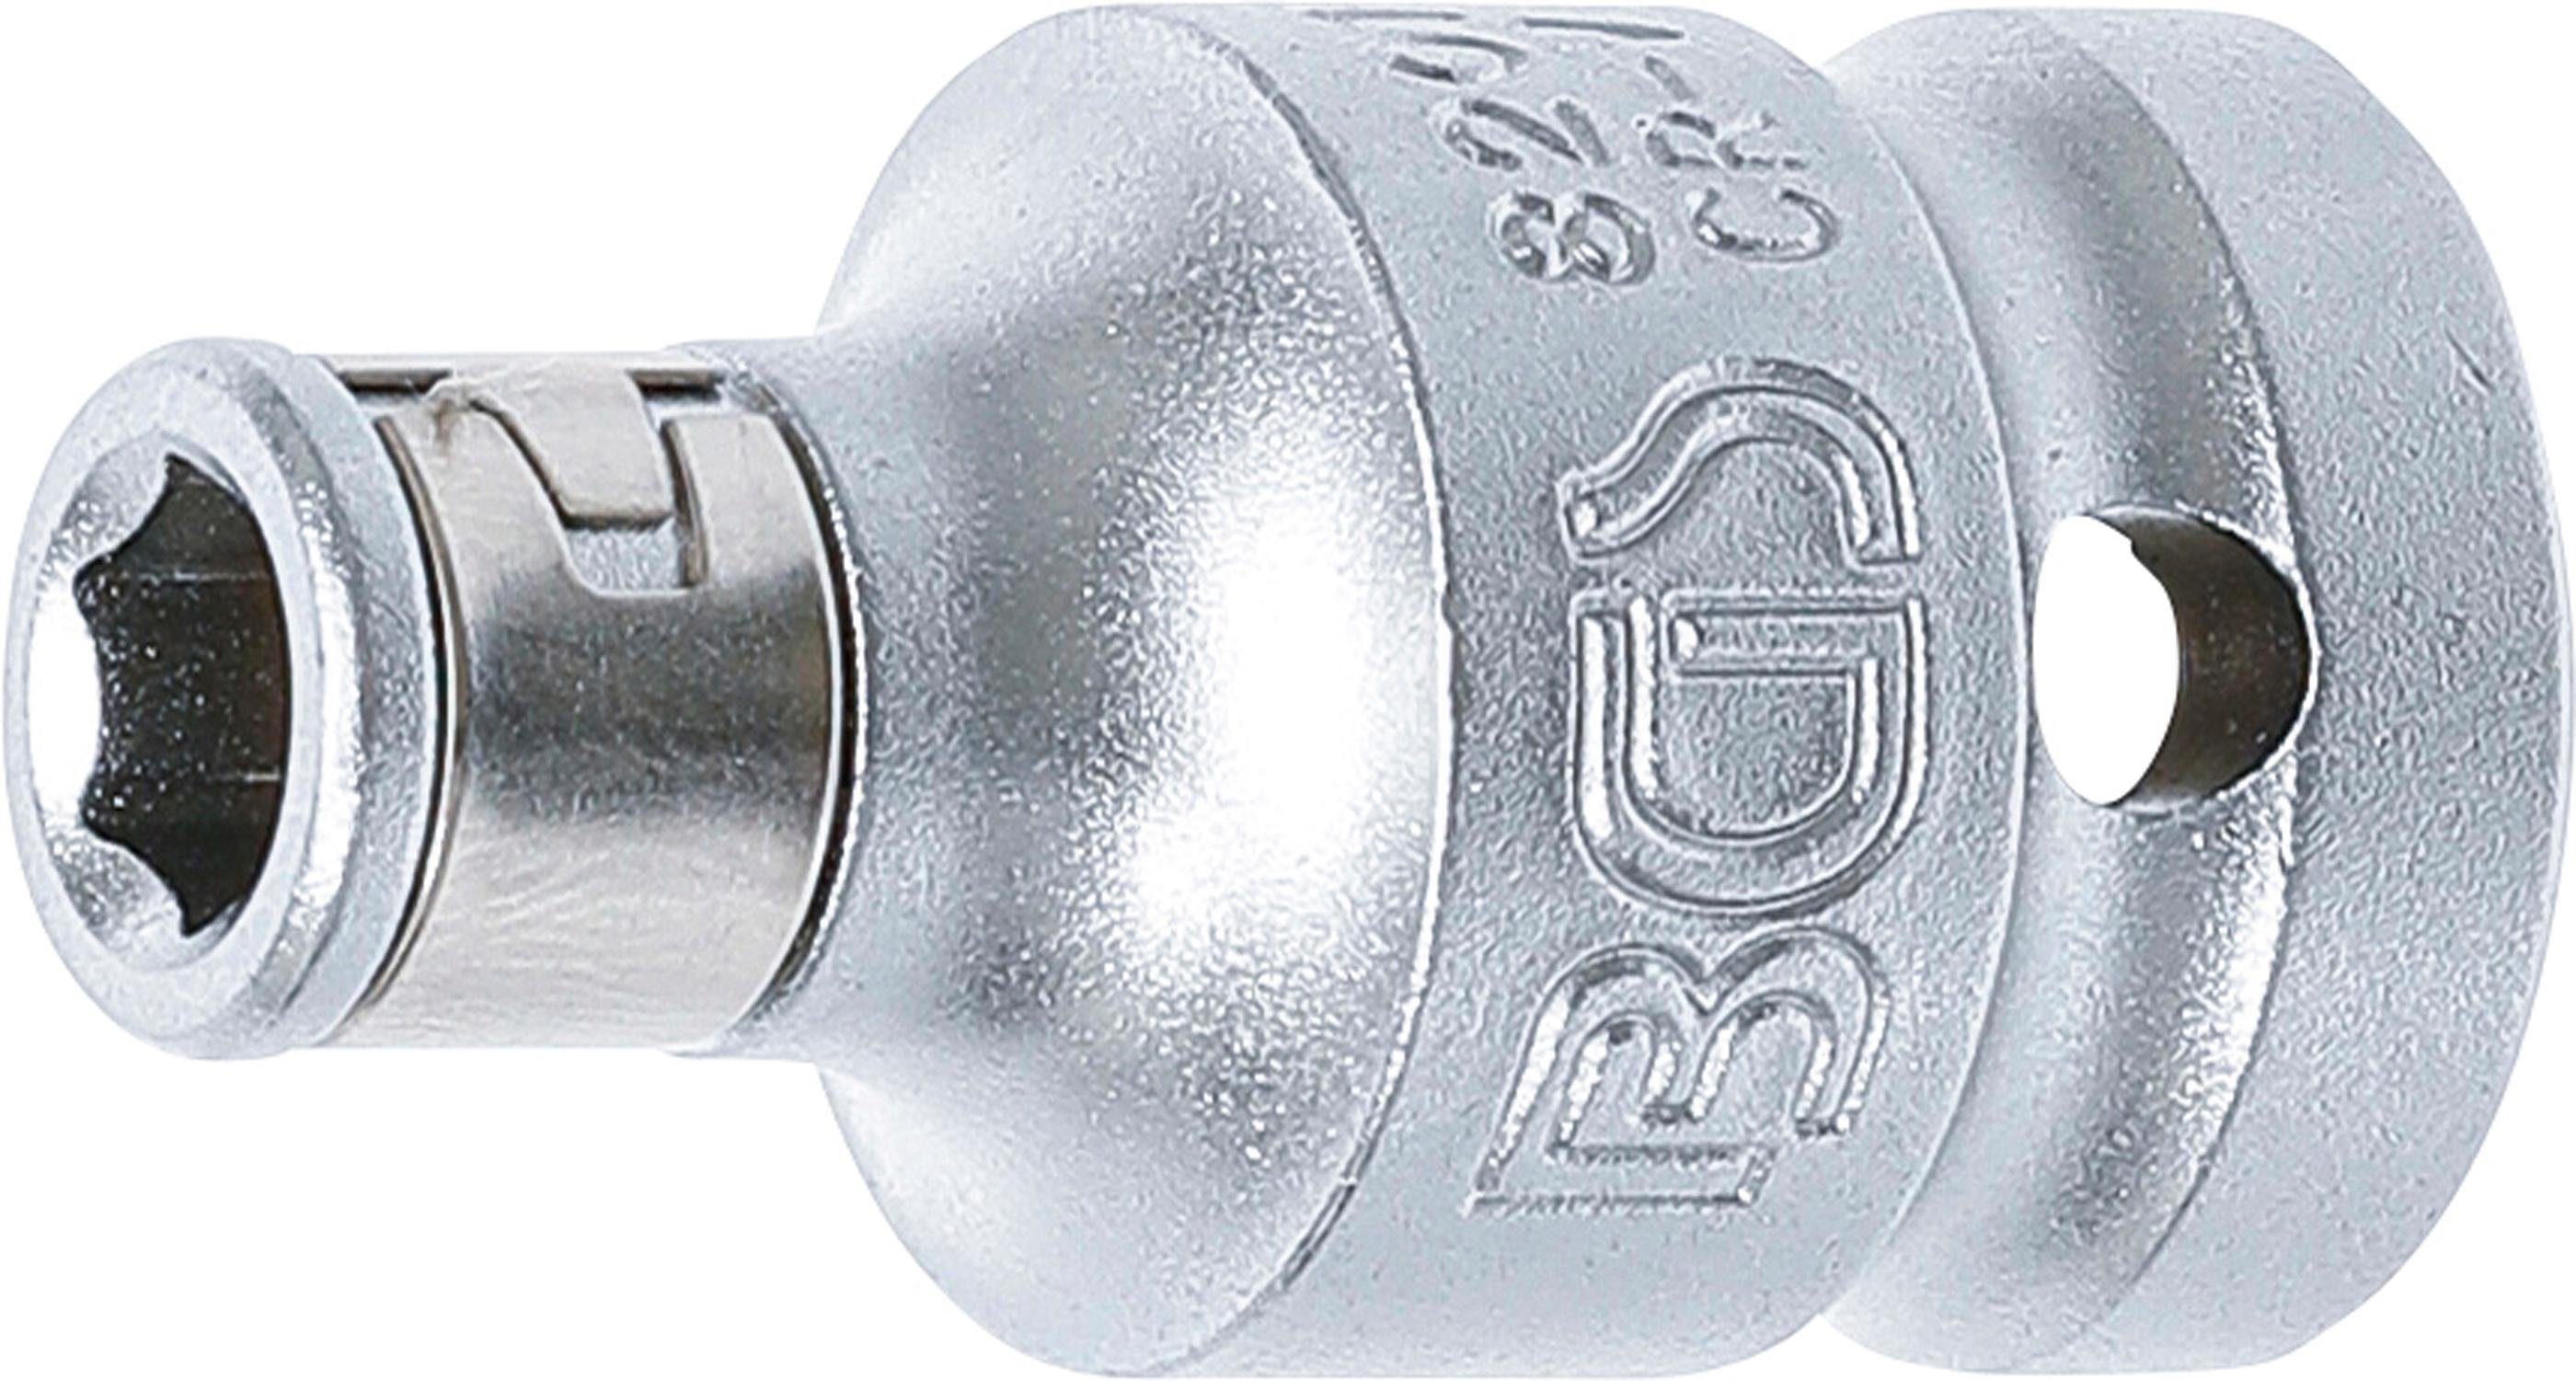 BGS technic Bit-Schraubendreher Bit-Adapter mit Haltekugel, Innenvierkant 12,5 mm (1/2), Innensechskant 6,3 mm (1/4)